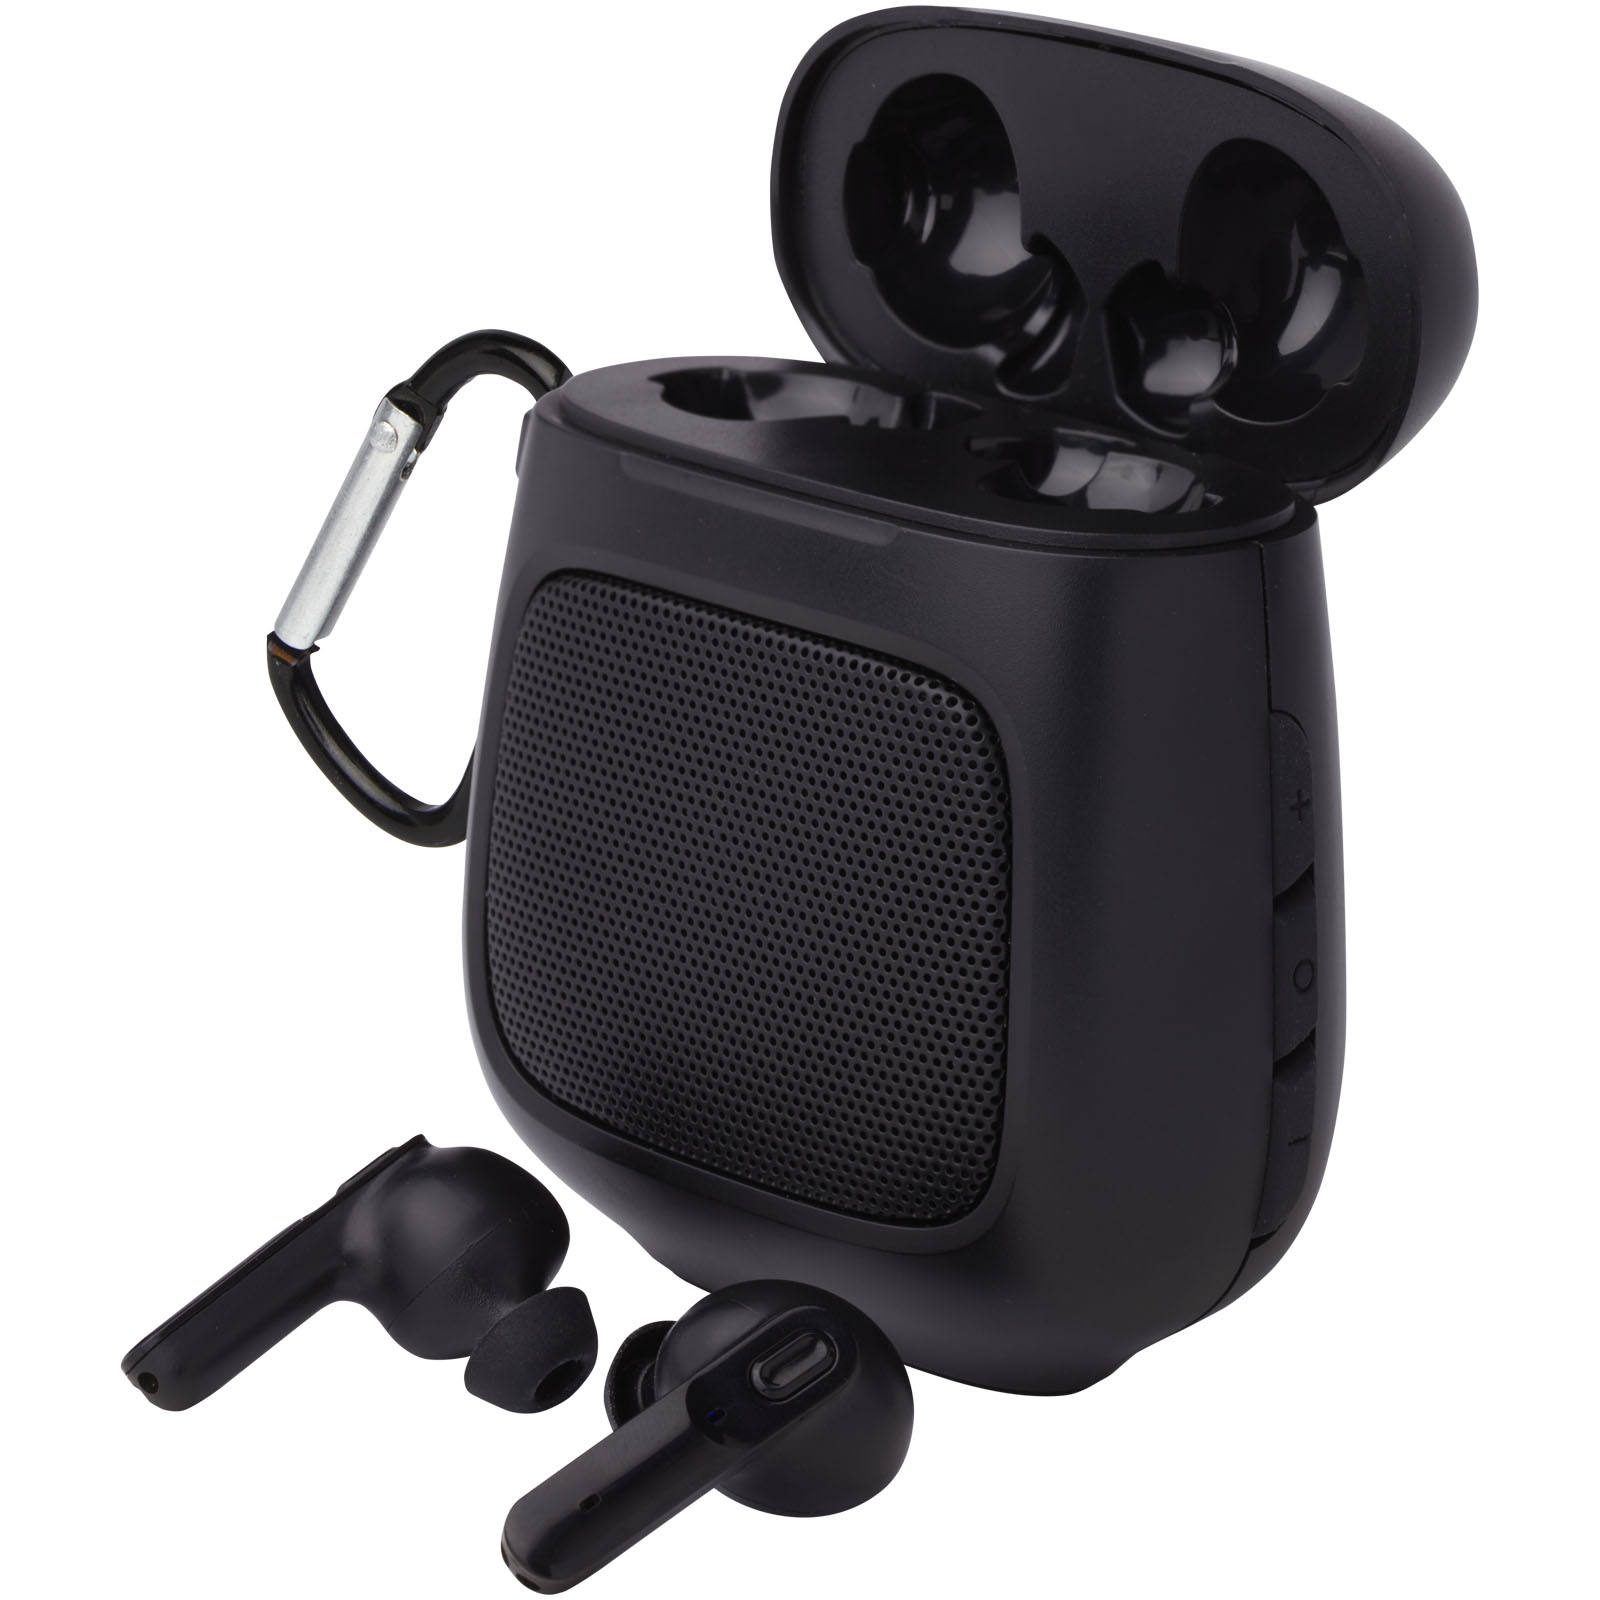 Advertising Speakers - Remix auto pair True Wireless earbuds and speaker - 0